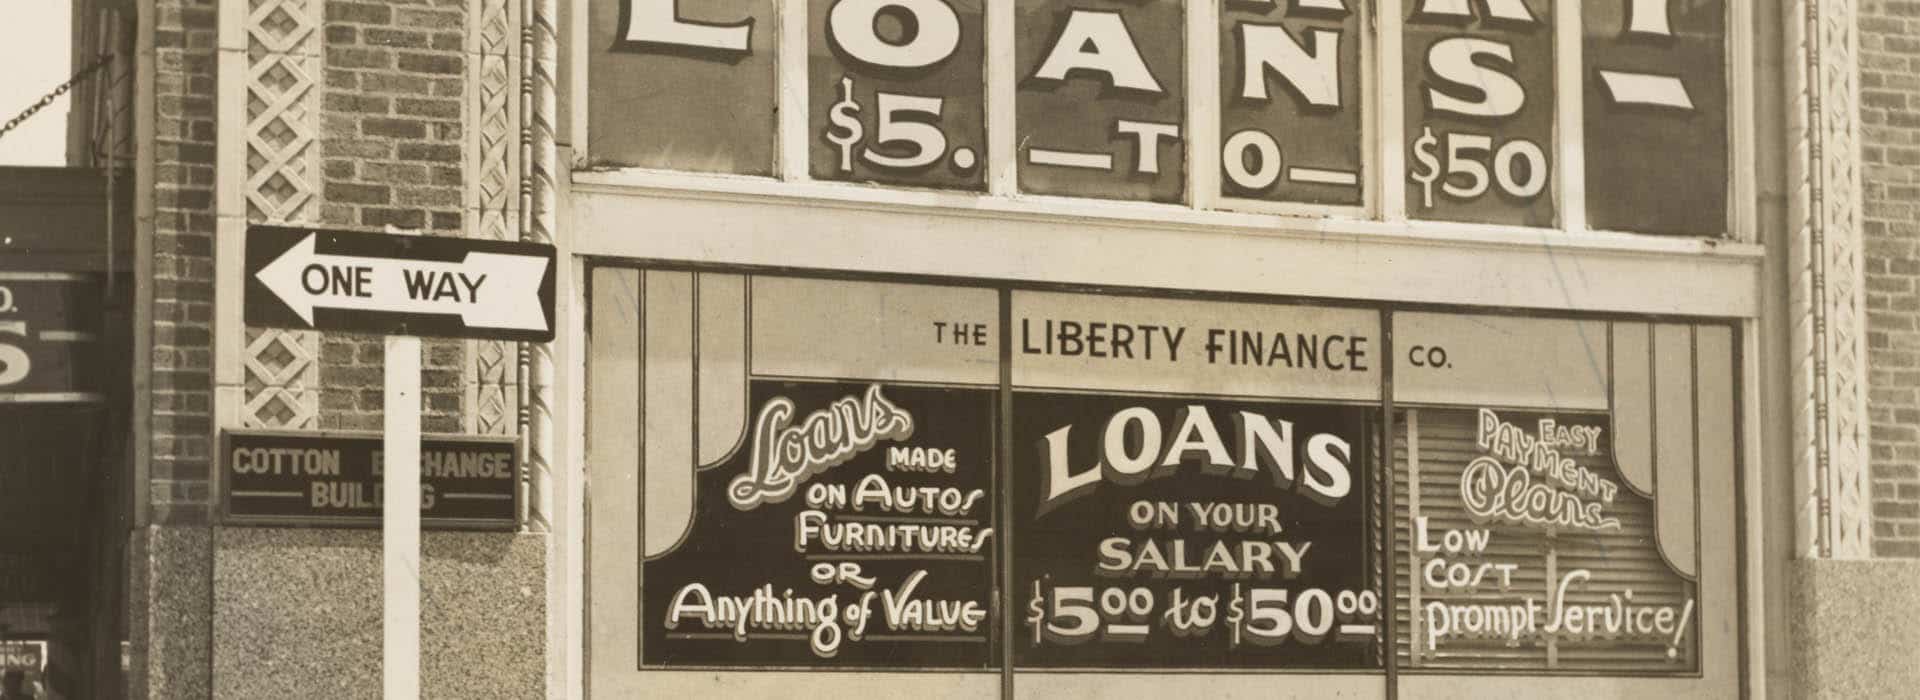 Payday Loan Pitfalls: An Industry Scrutinized